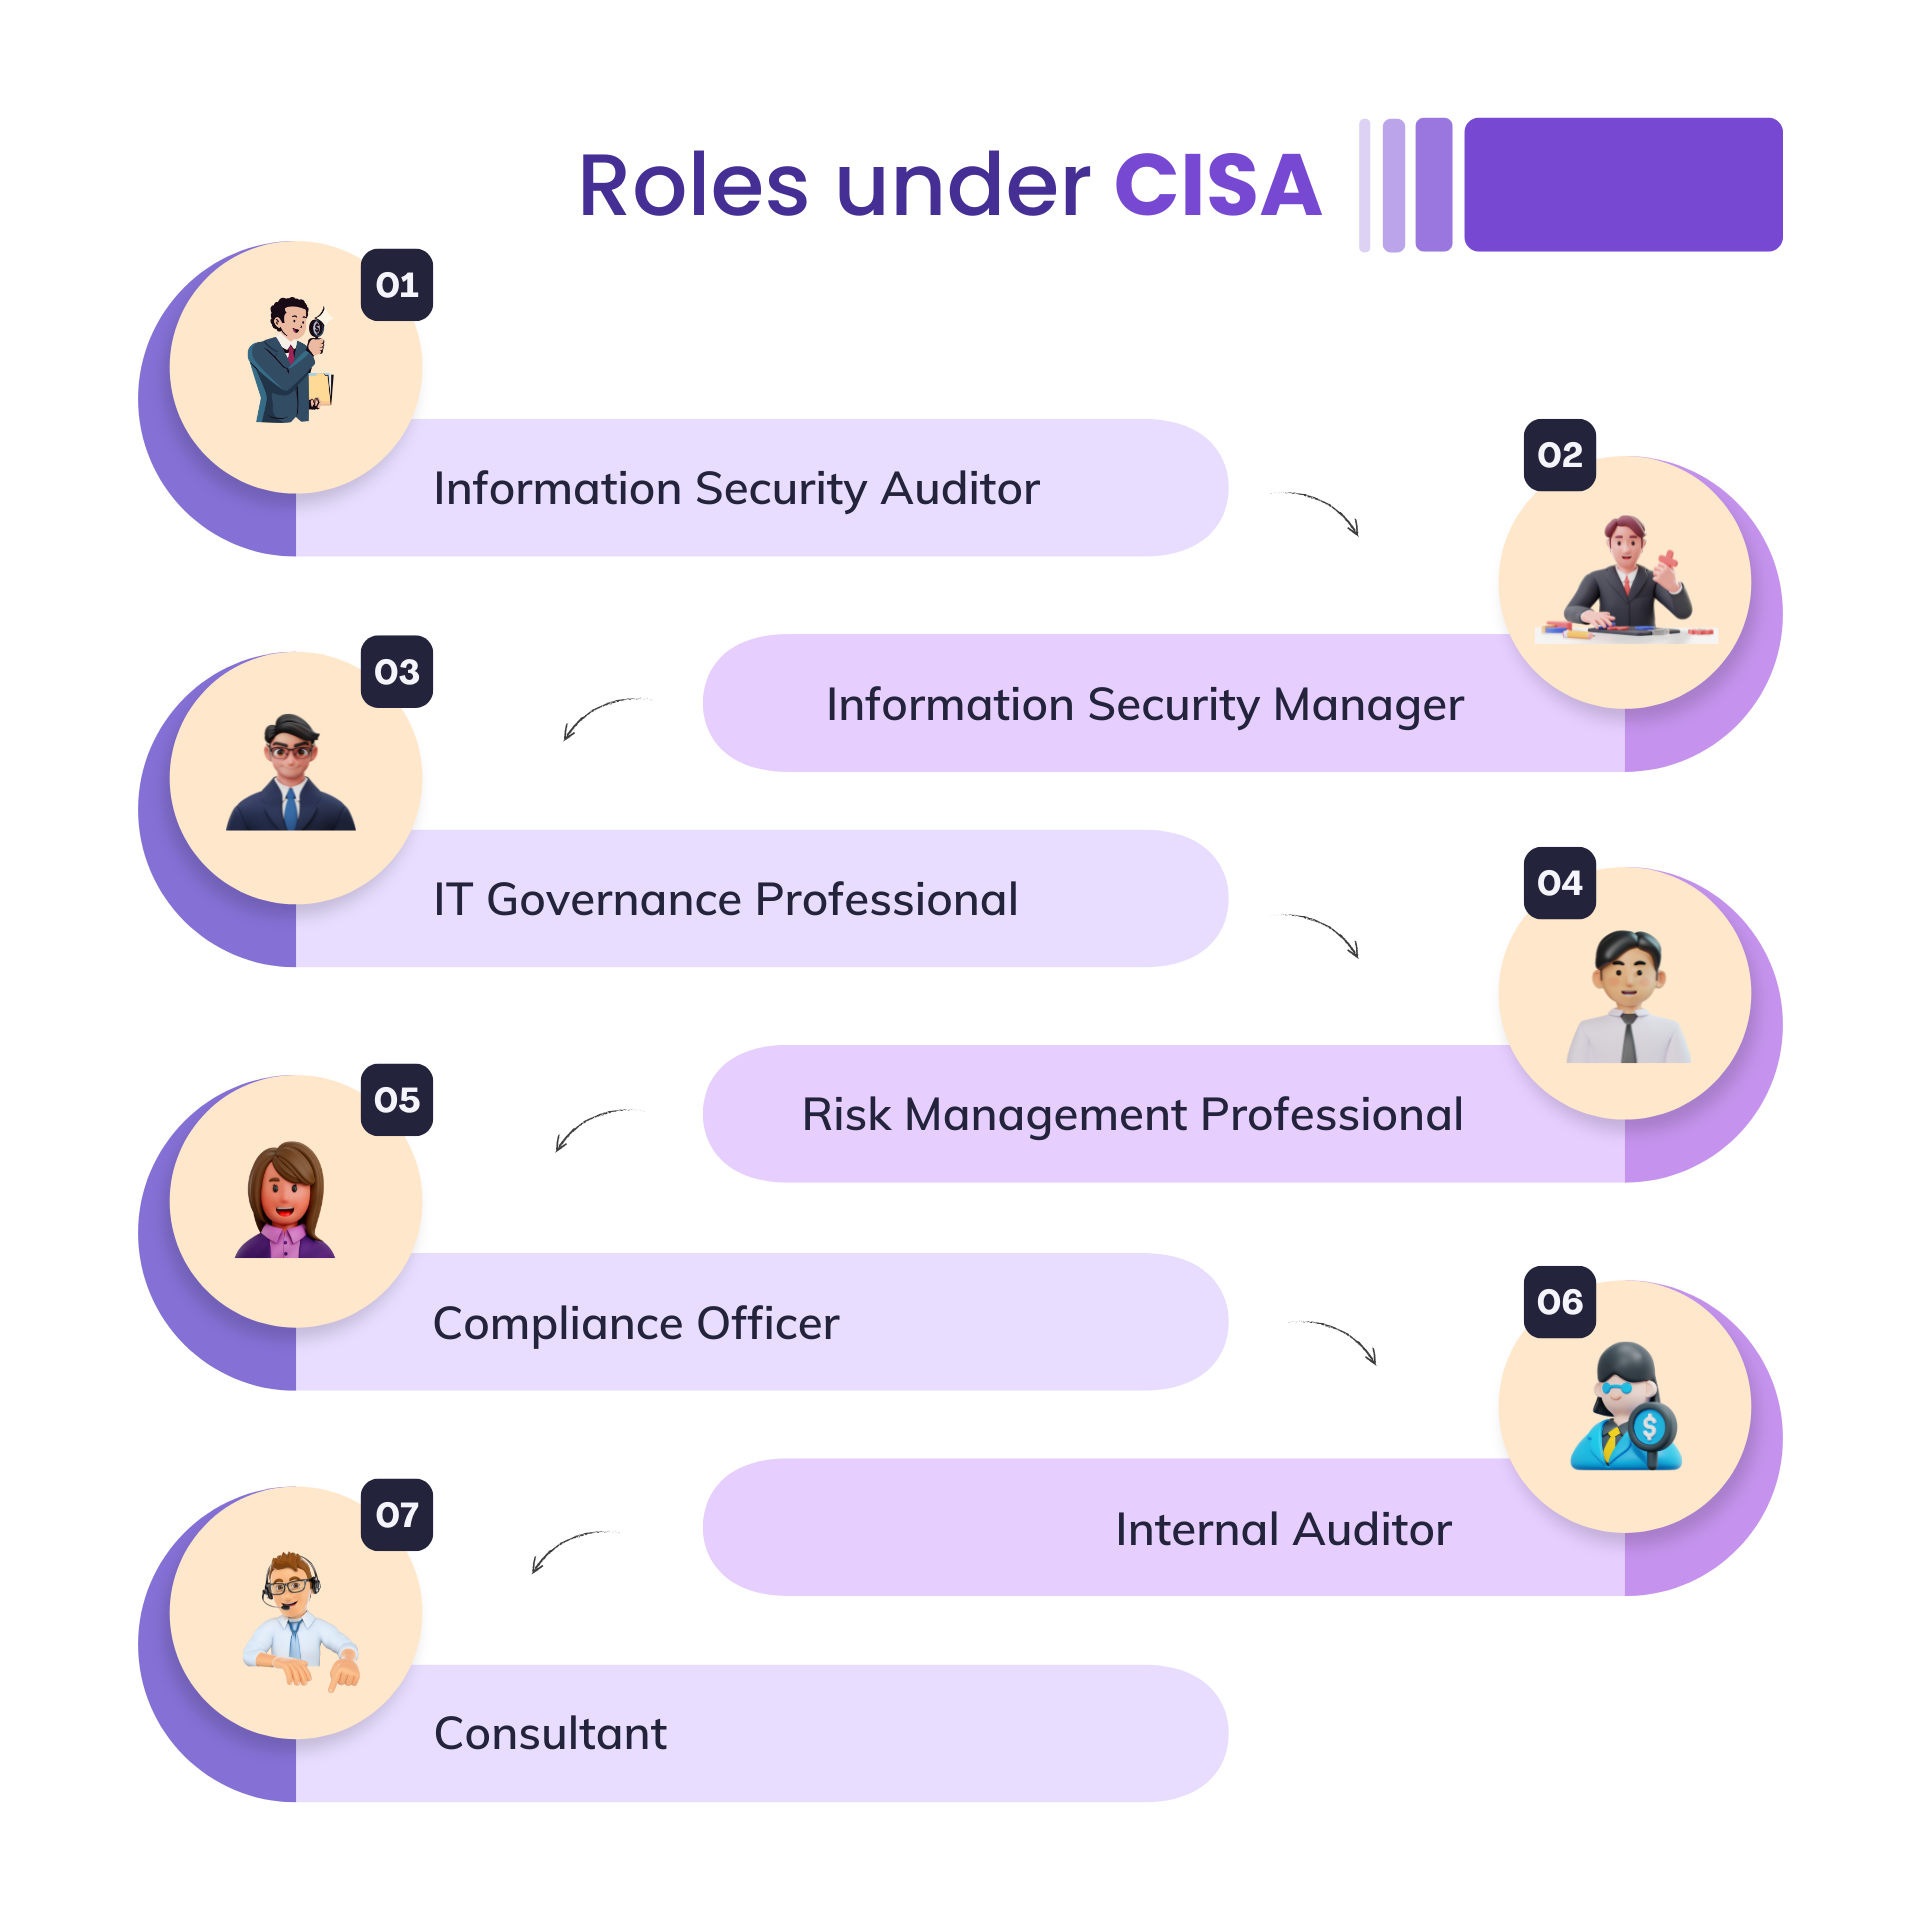 Roles under CISA